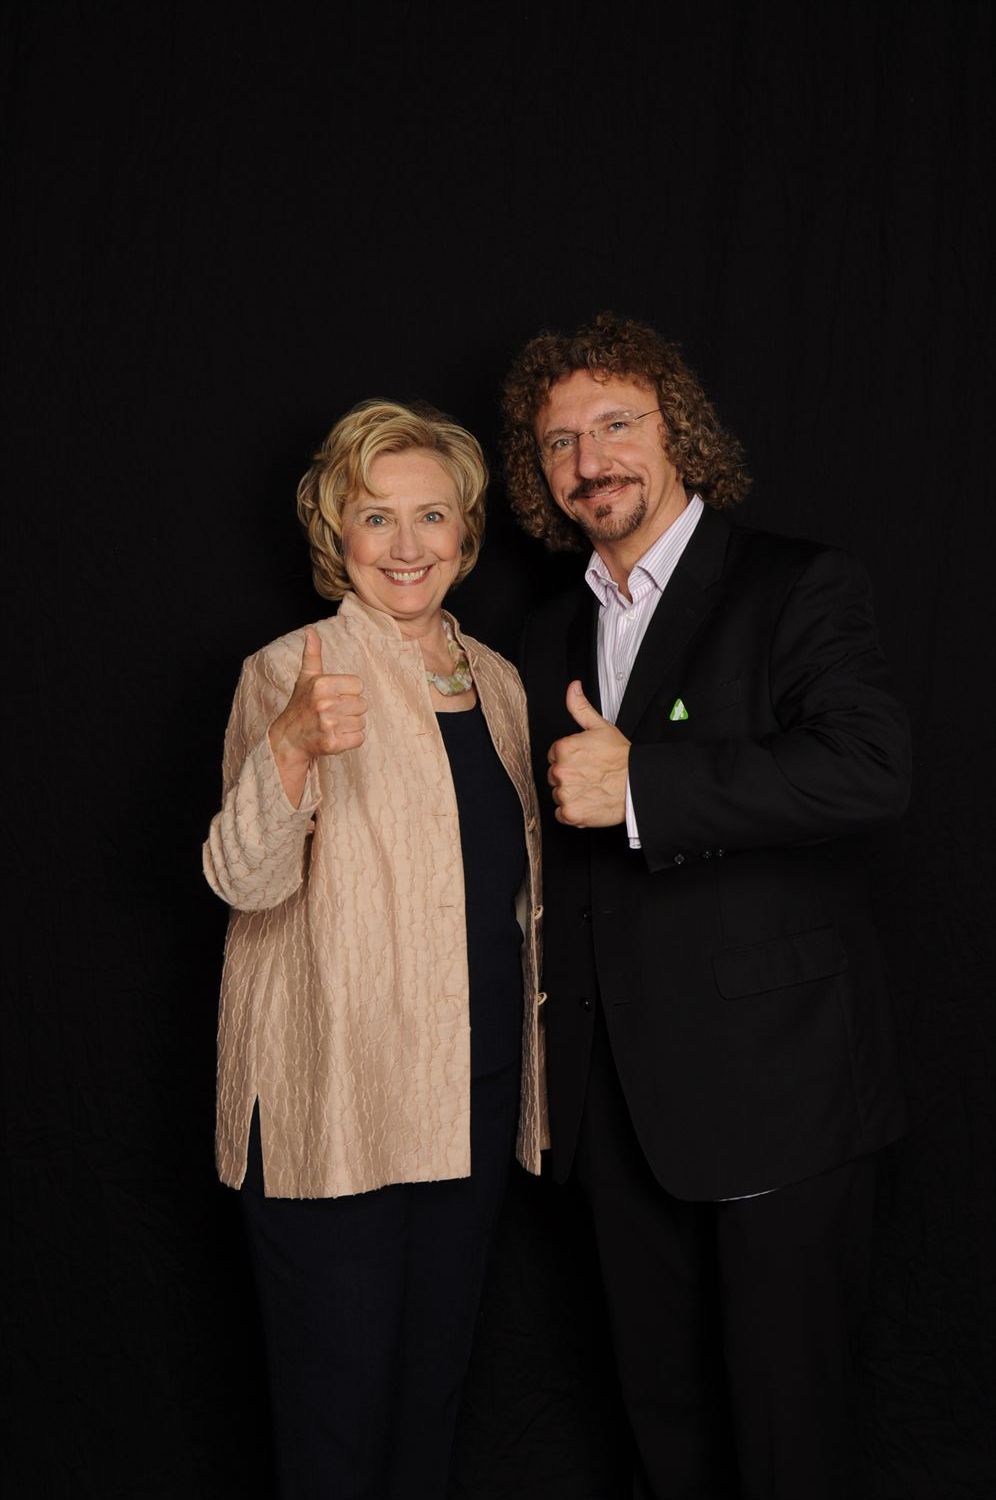 Hillary Clinton and Steven Elbert